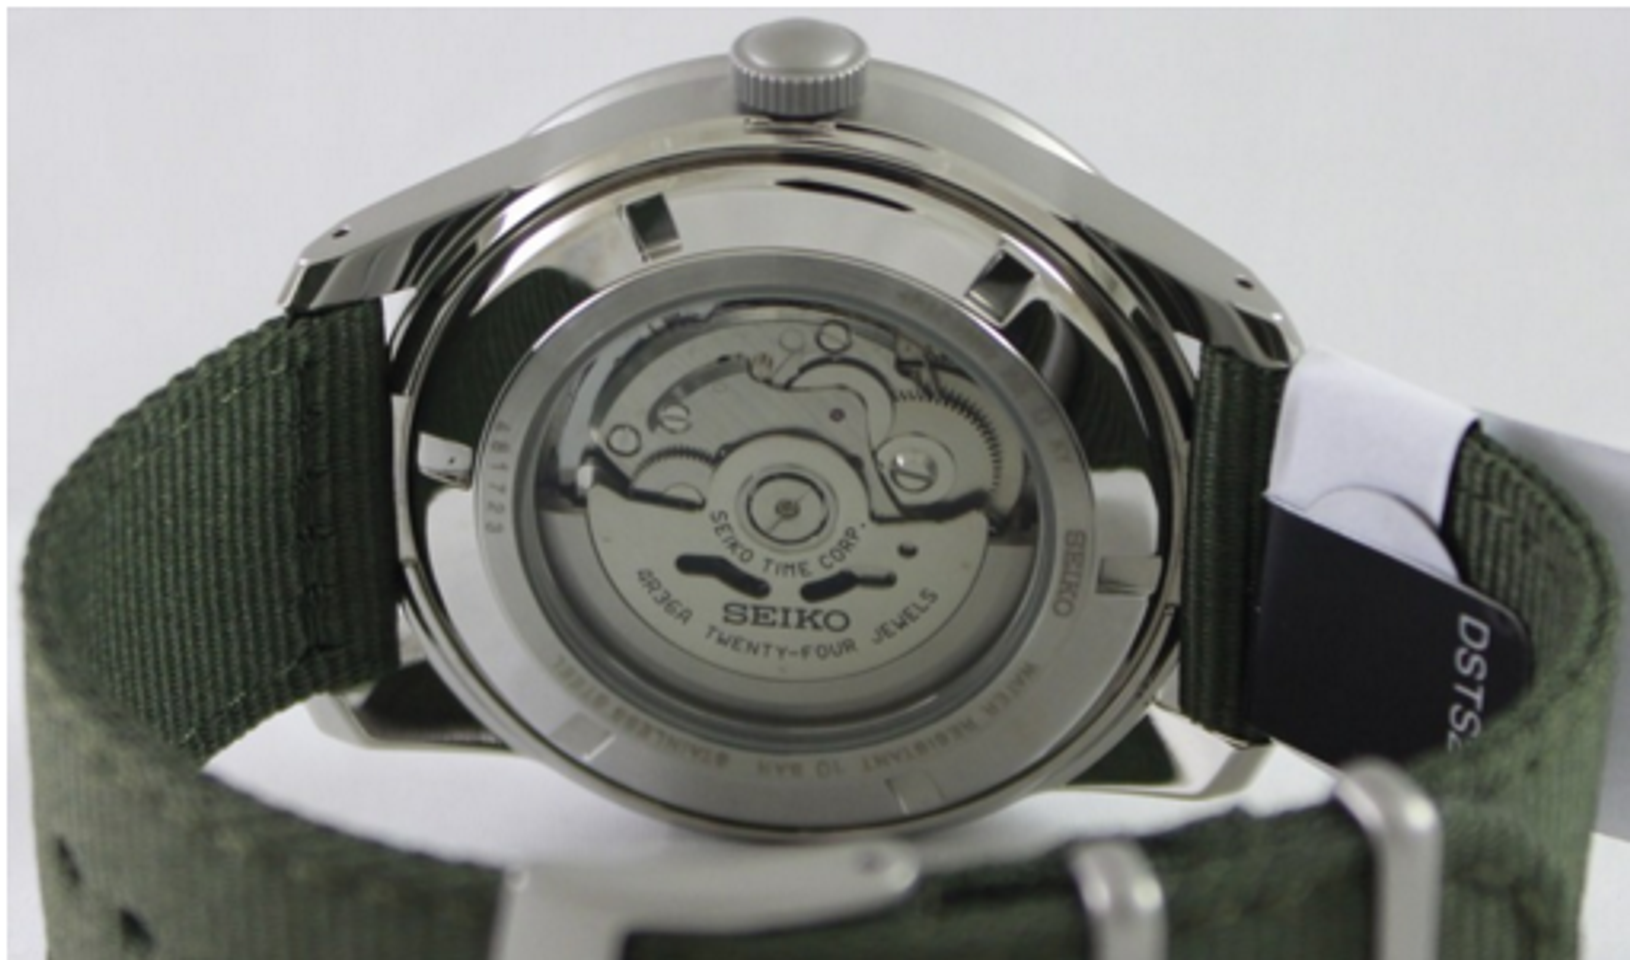 Đồng hồ Seiko 5 sport SRP621K1 giá rẻ